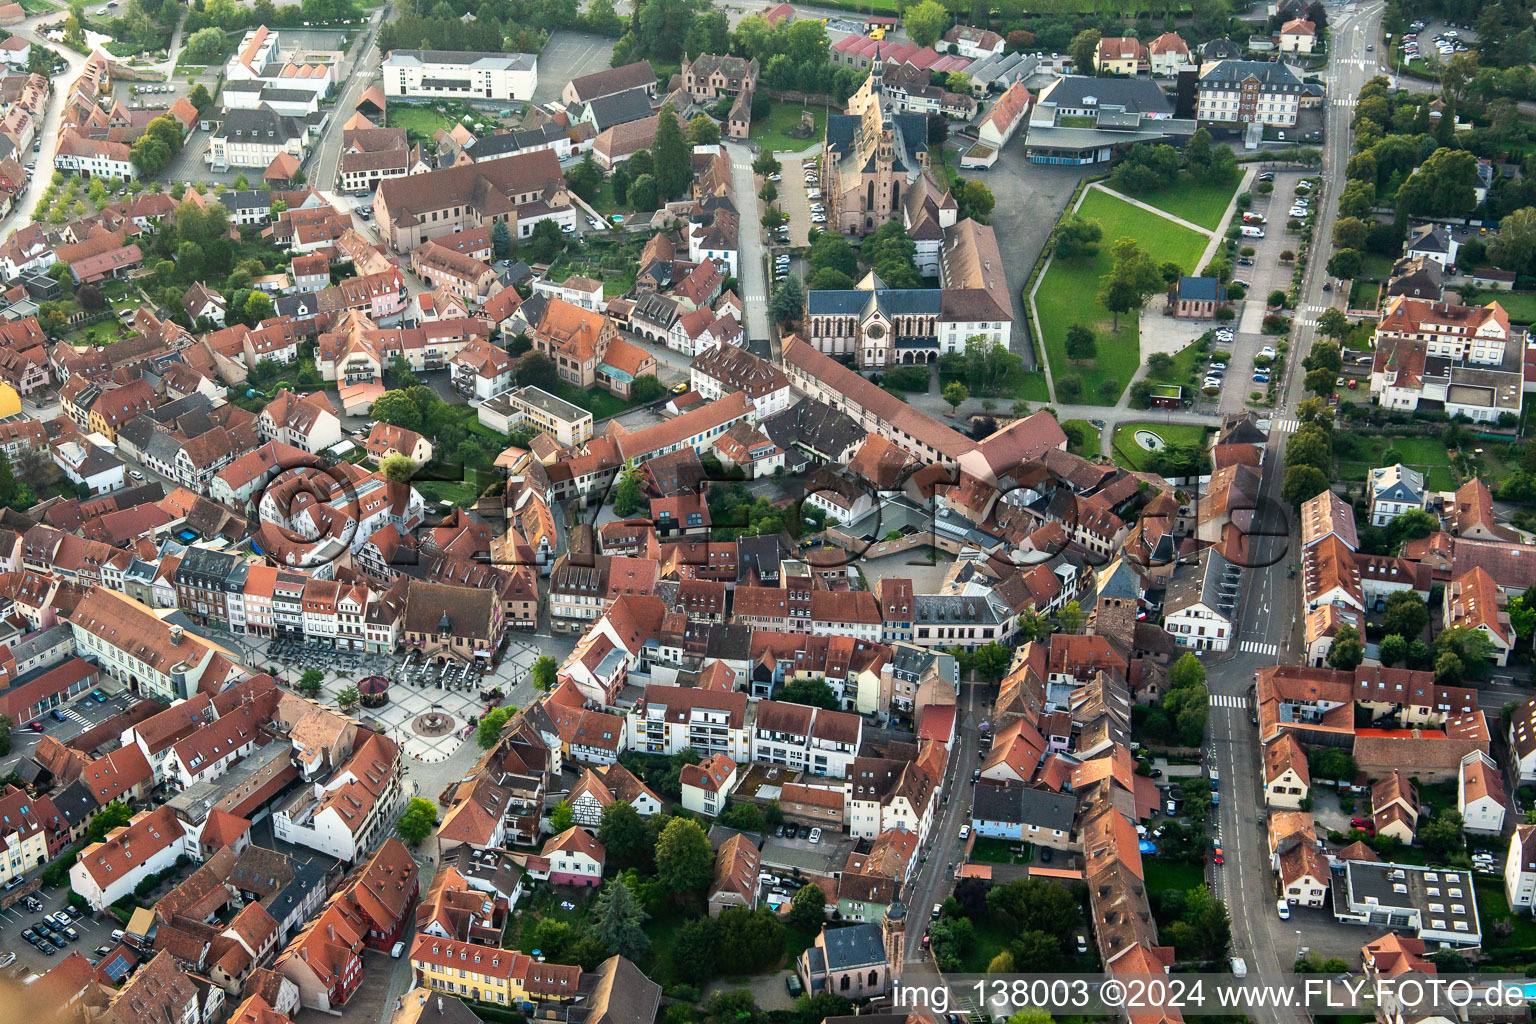 Aerial view of Place de l'Hôtel de Ville in Molsheim in the state Bas-Rhin, France